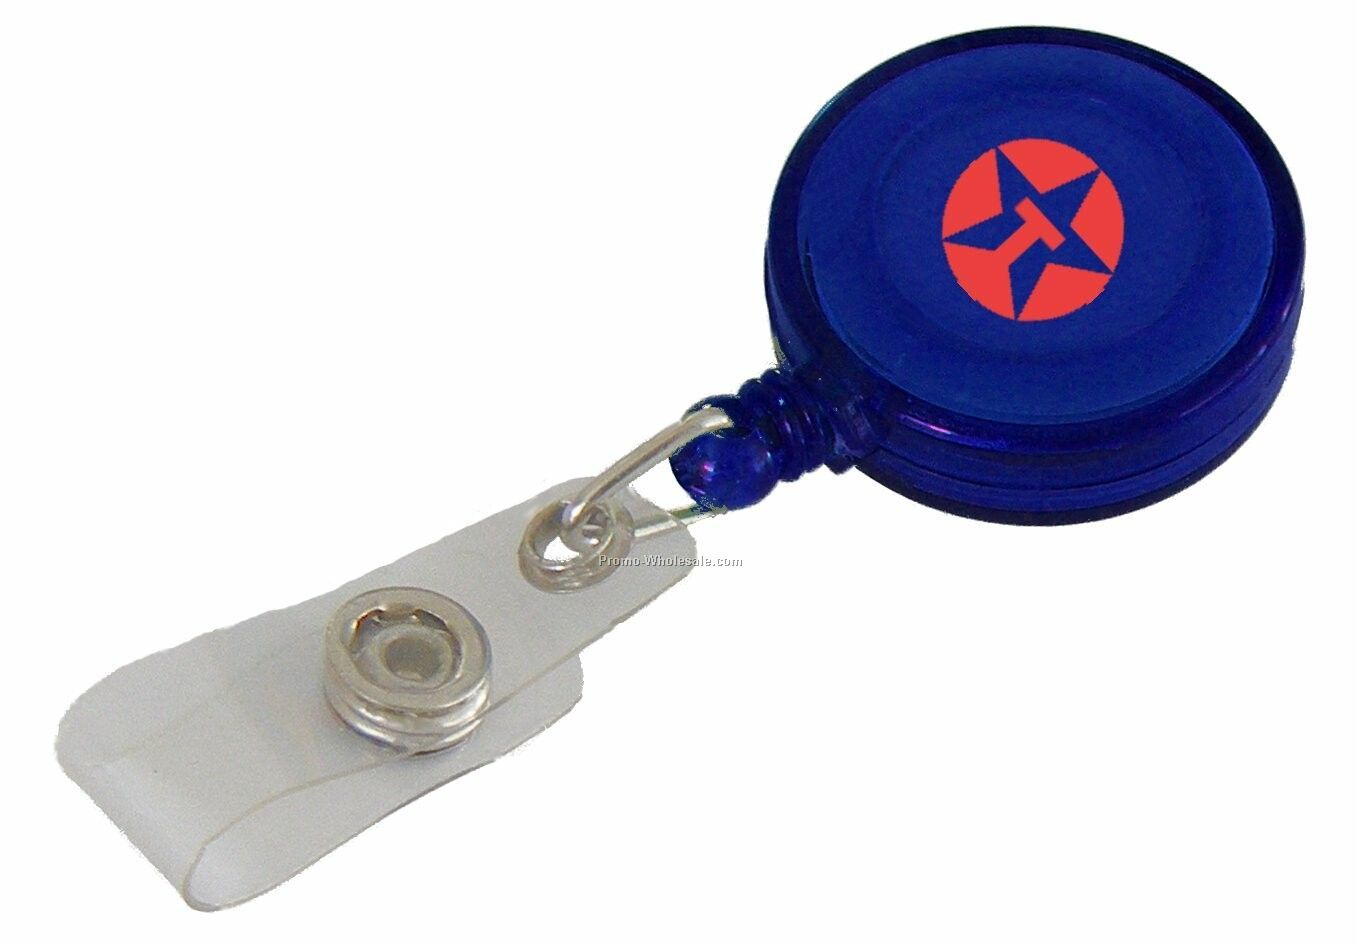 Retractable Badge Holder With Metal Belt Clip